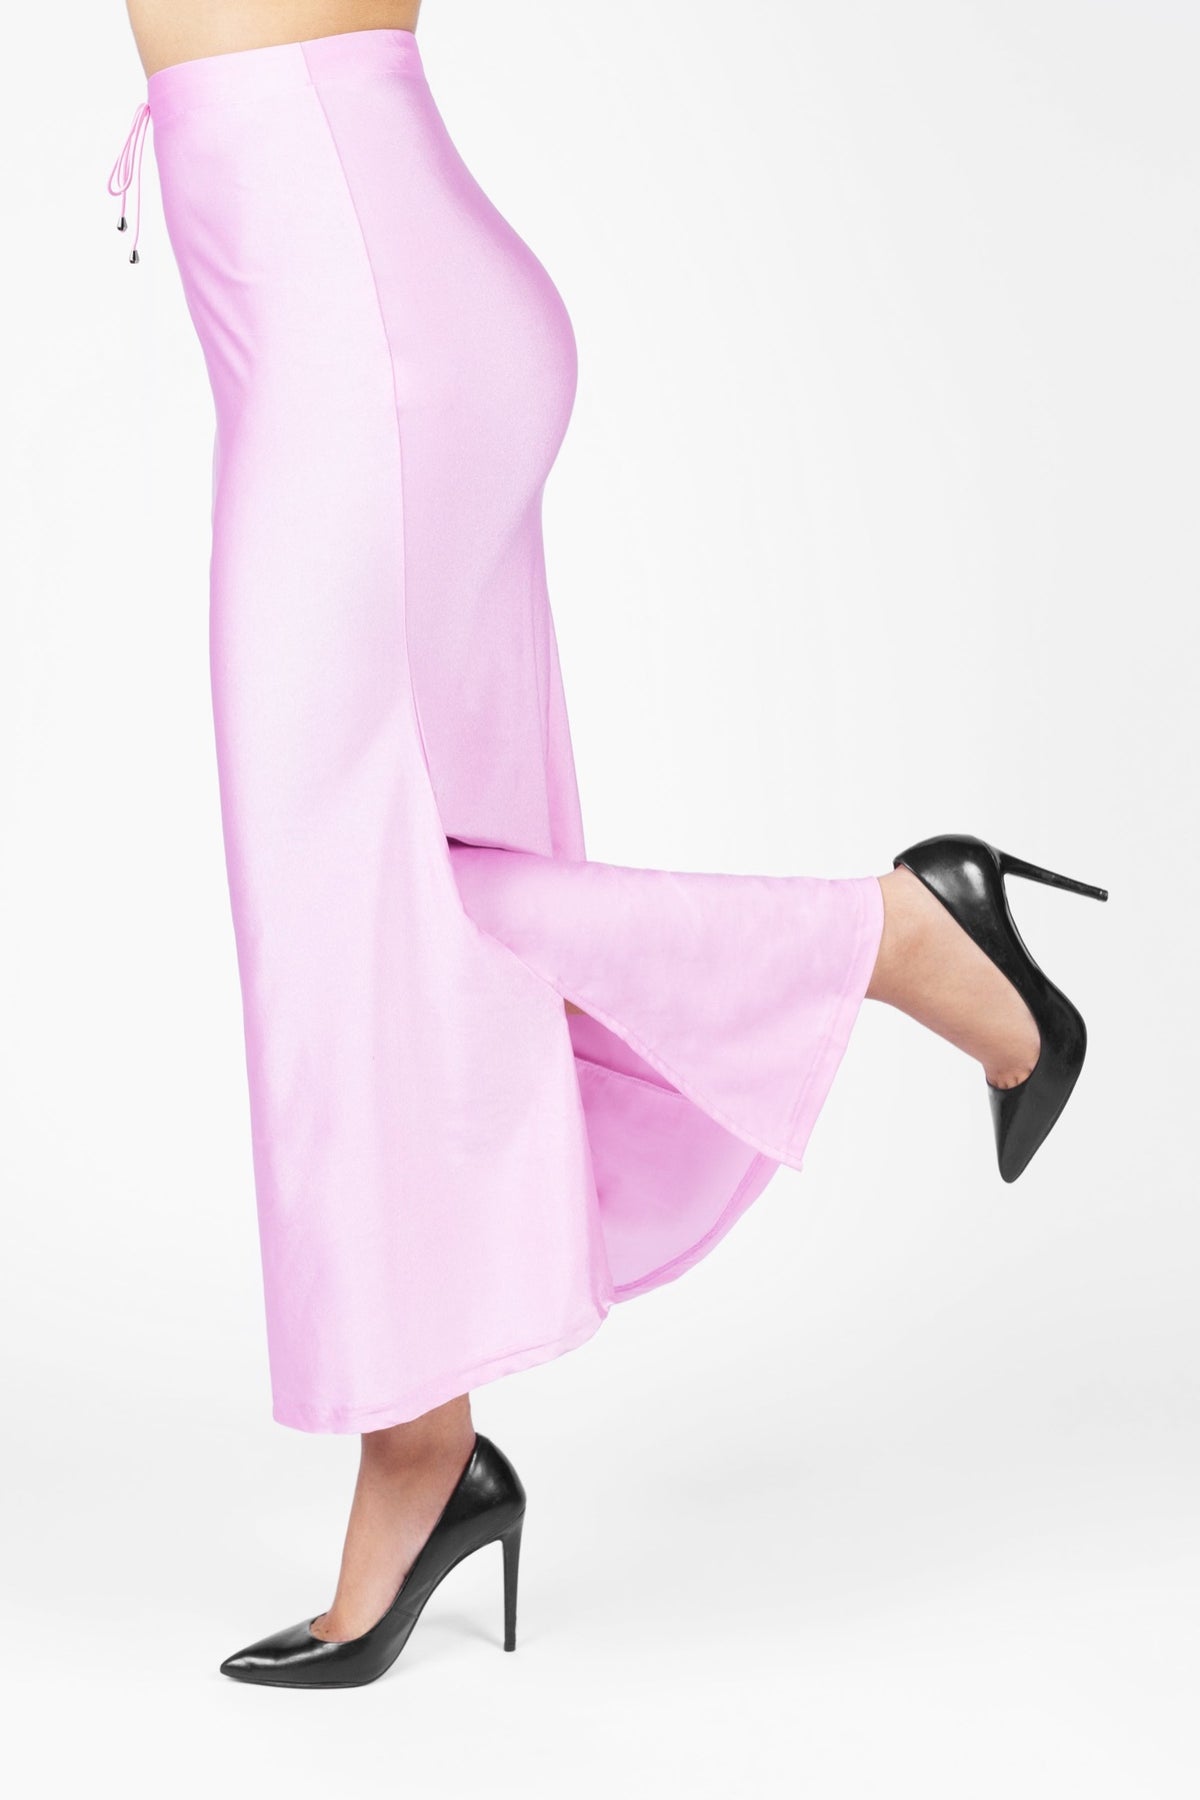 Glamwiz Slim Fit Saree Shapewear - Light Pink – Glamwiz India